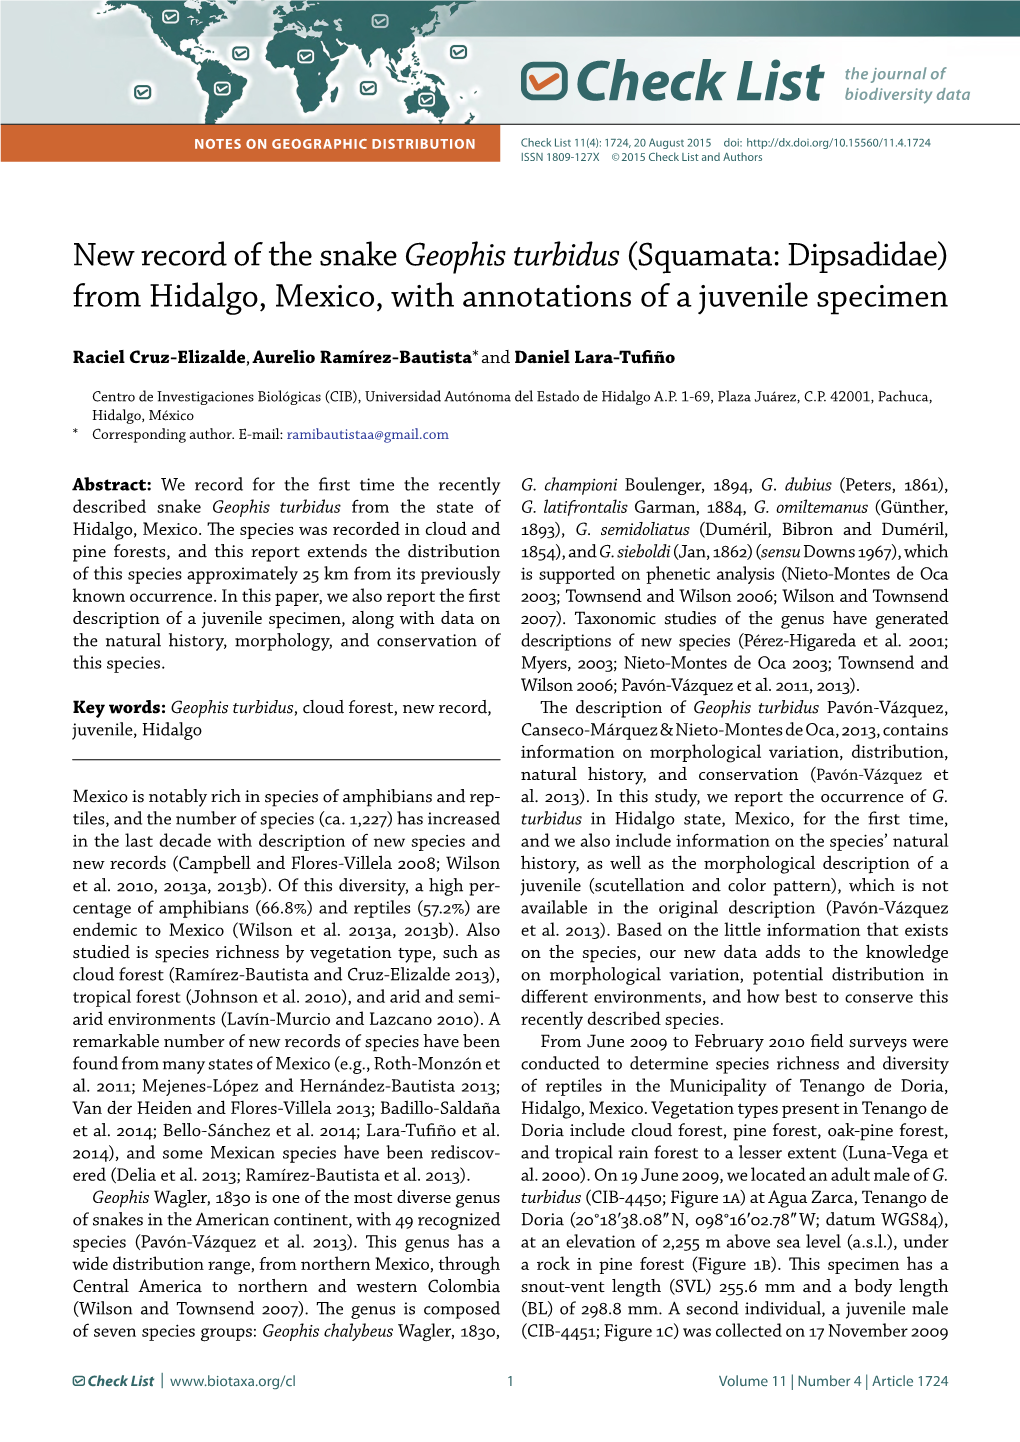 New Record of the Snake Geophisturbidus (Squamata